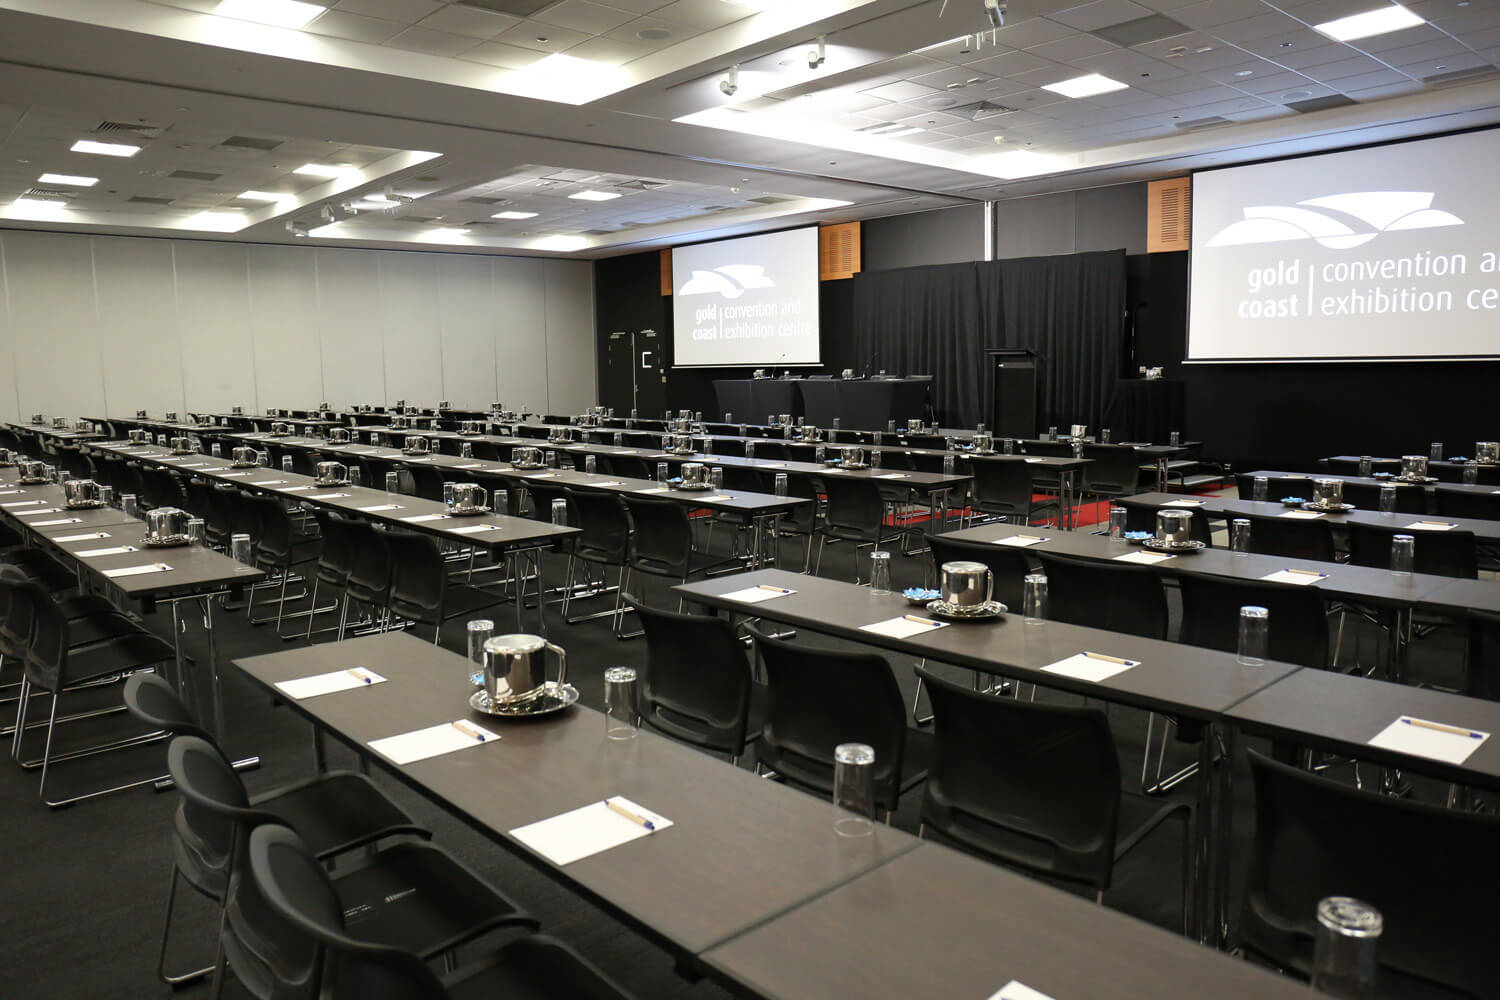 Meeting Rooms 5 to 8 - Venue Capacities & Specs